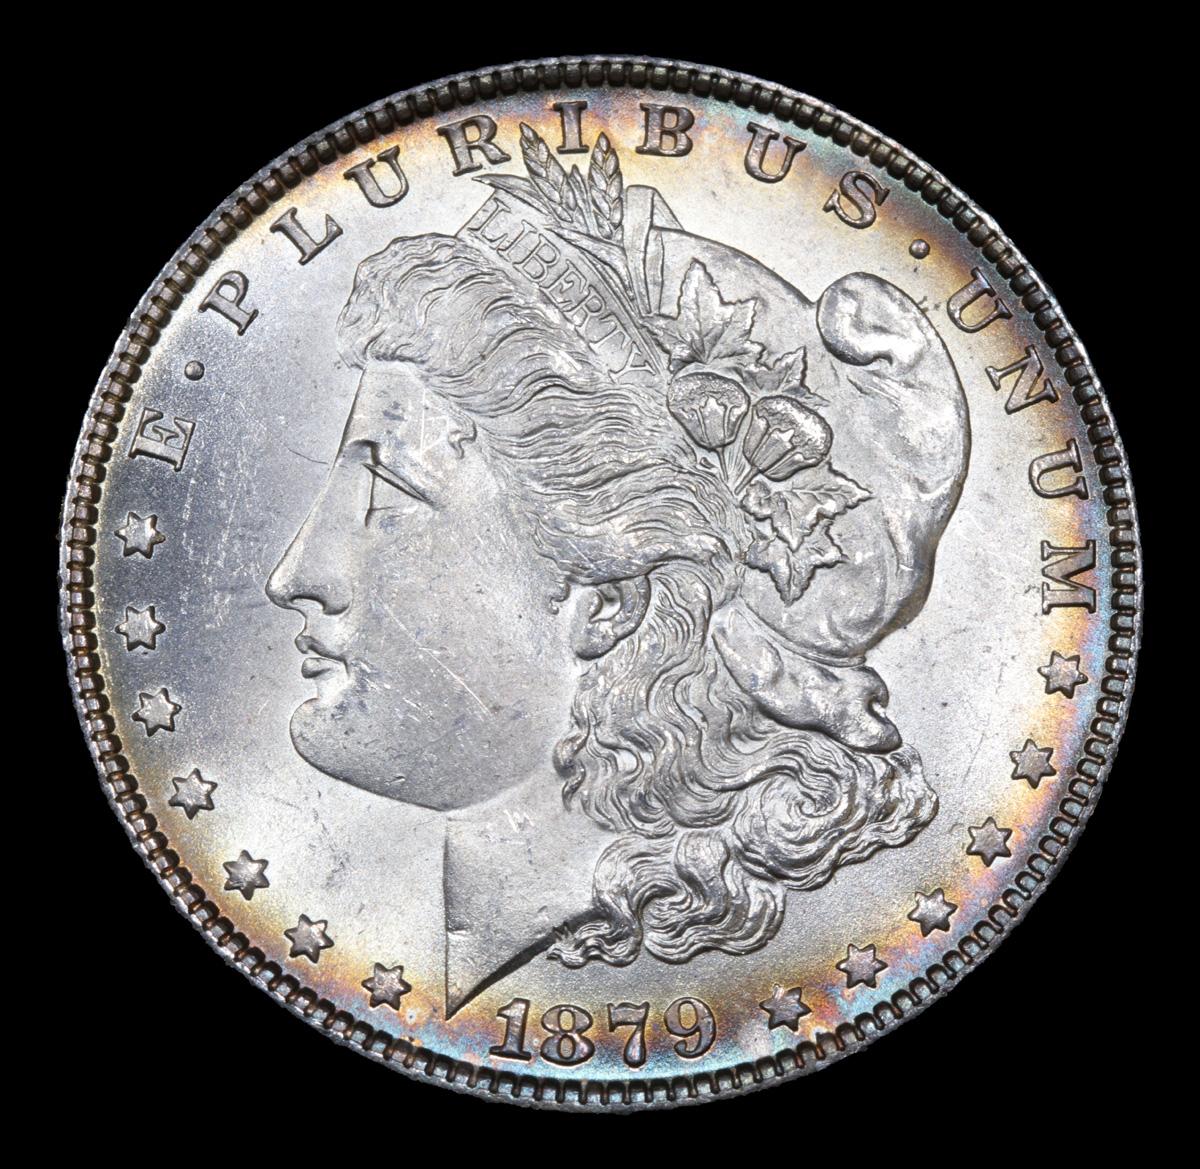 ***Auction Highlight*** 1879-p Rainbow Toned Morgan Dollar $1 Graded GEM+ Unc By USCG (fc)